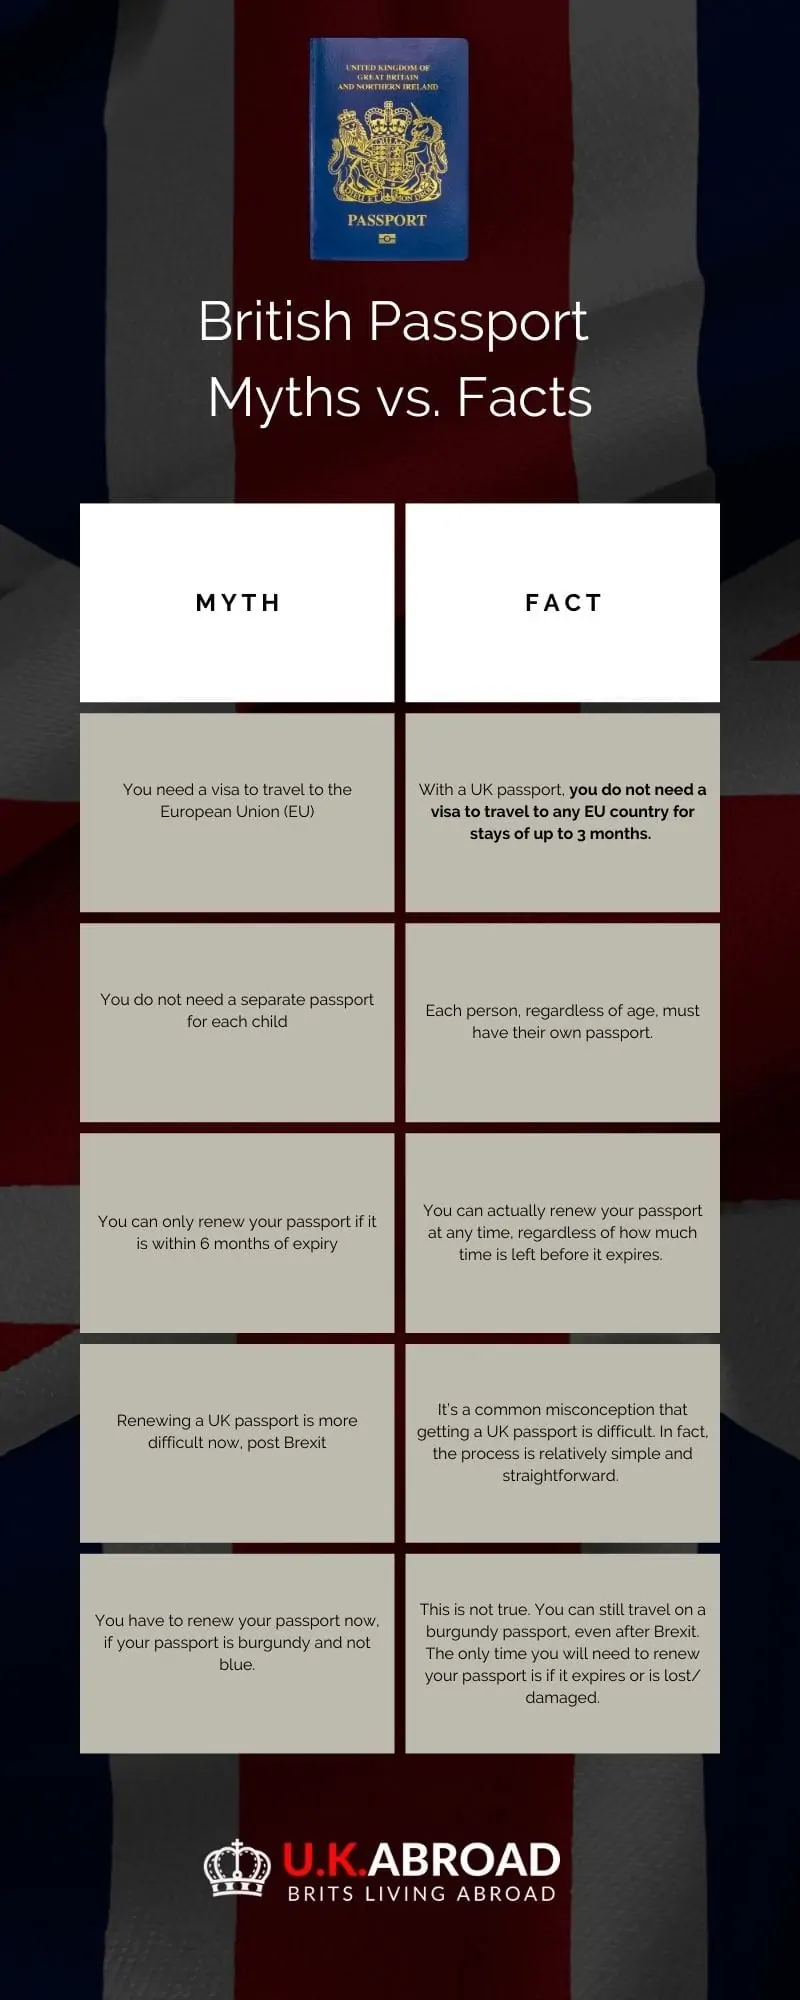 UK Passport myths infographic: myths vs facts